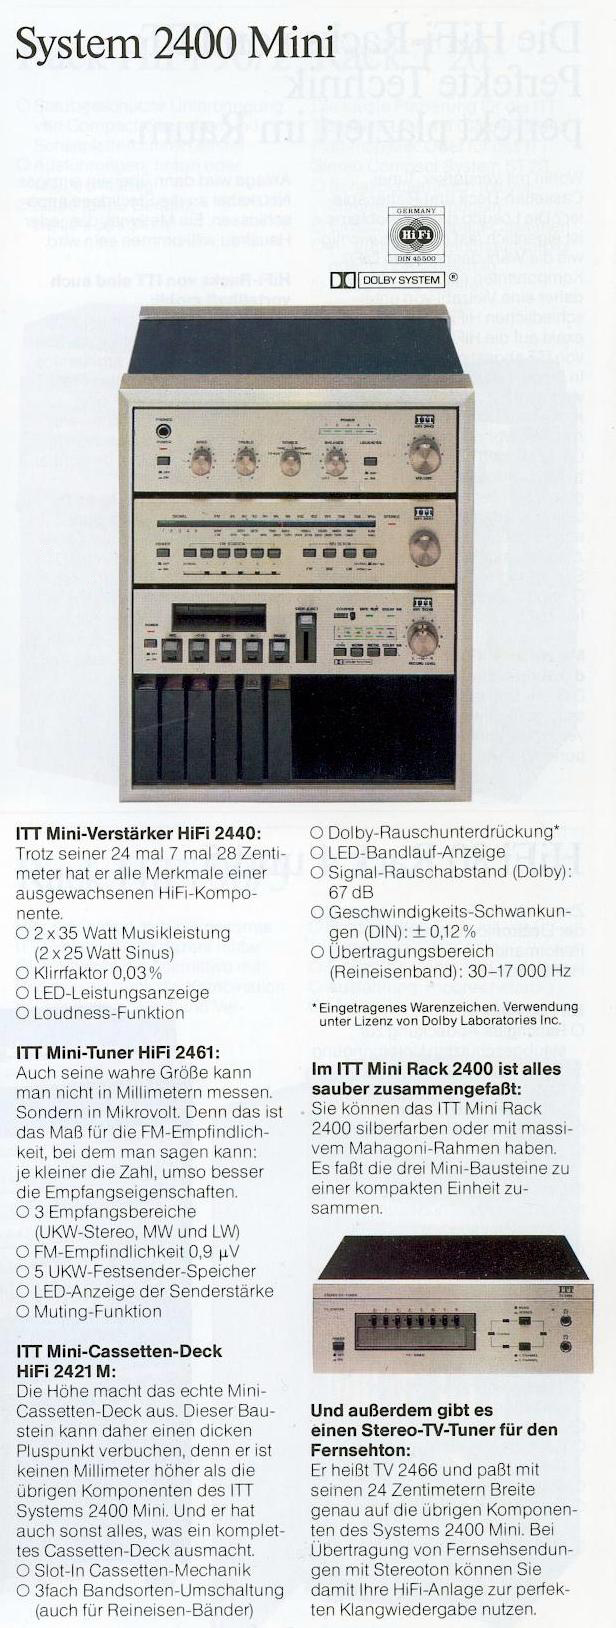 ITT System 2400 Mini-Prospekt-1.jpg